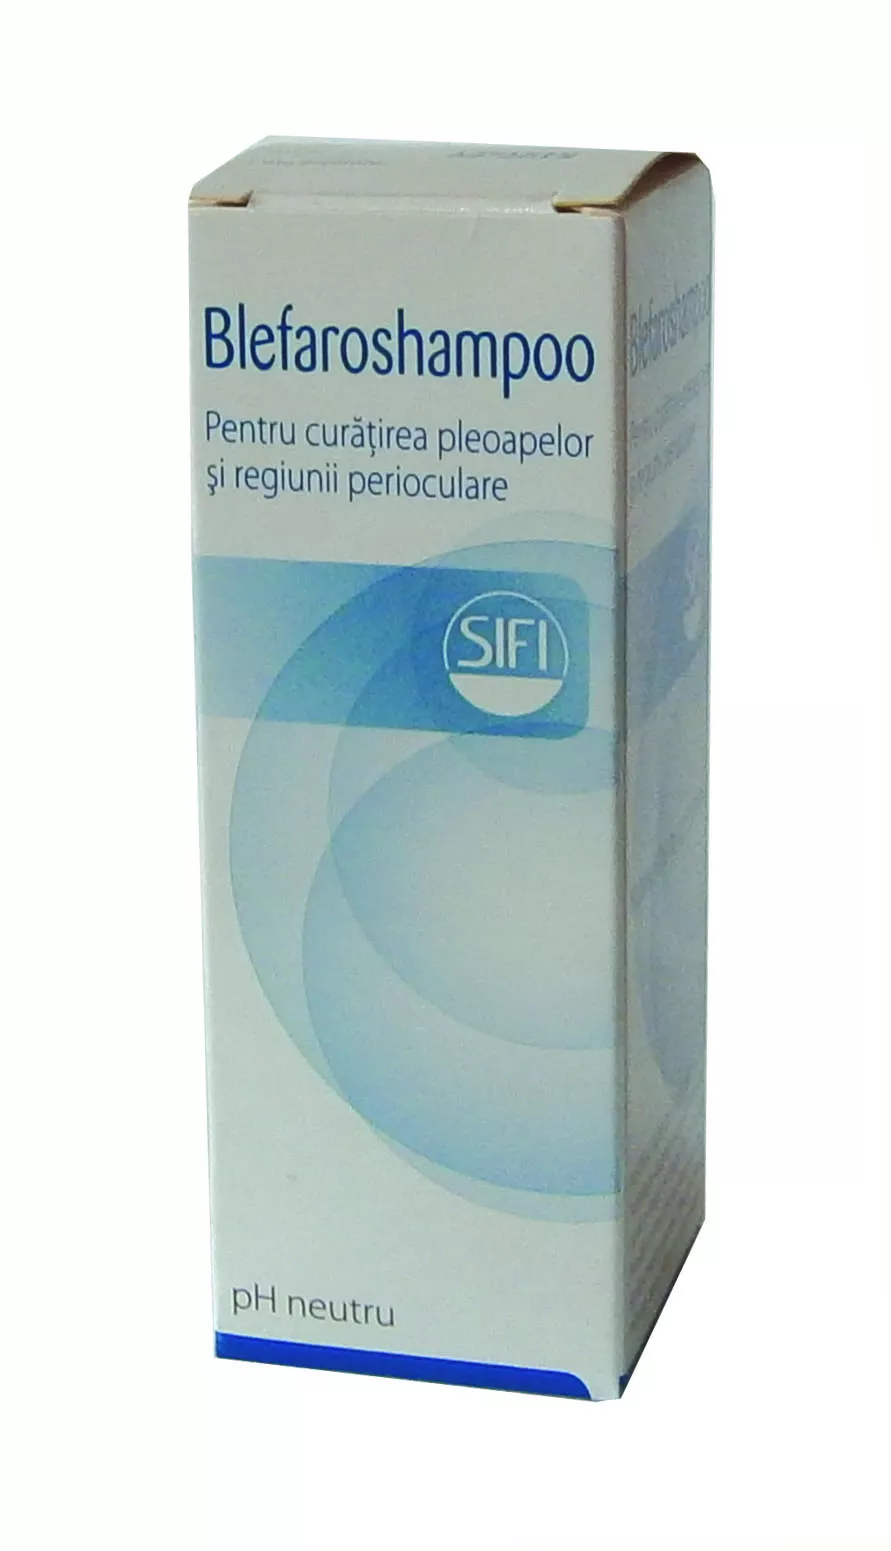 Blefaroshampoo, 40ml, Sifi, [],farmacom.ro